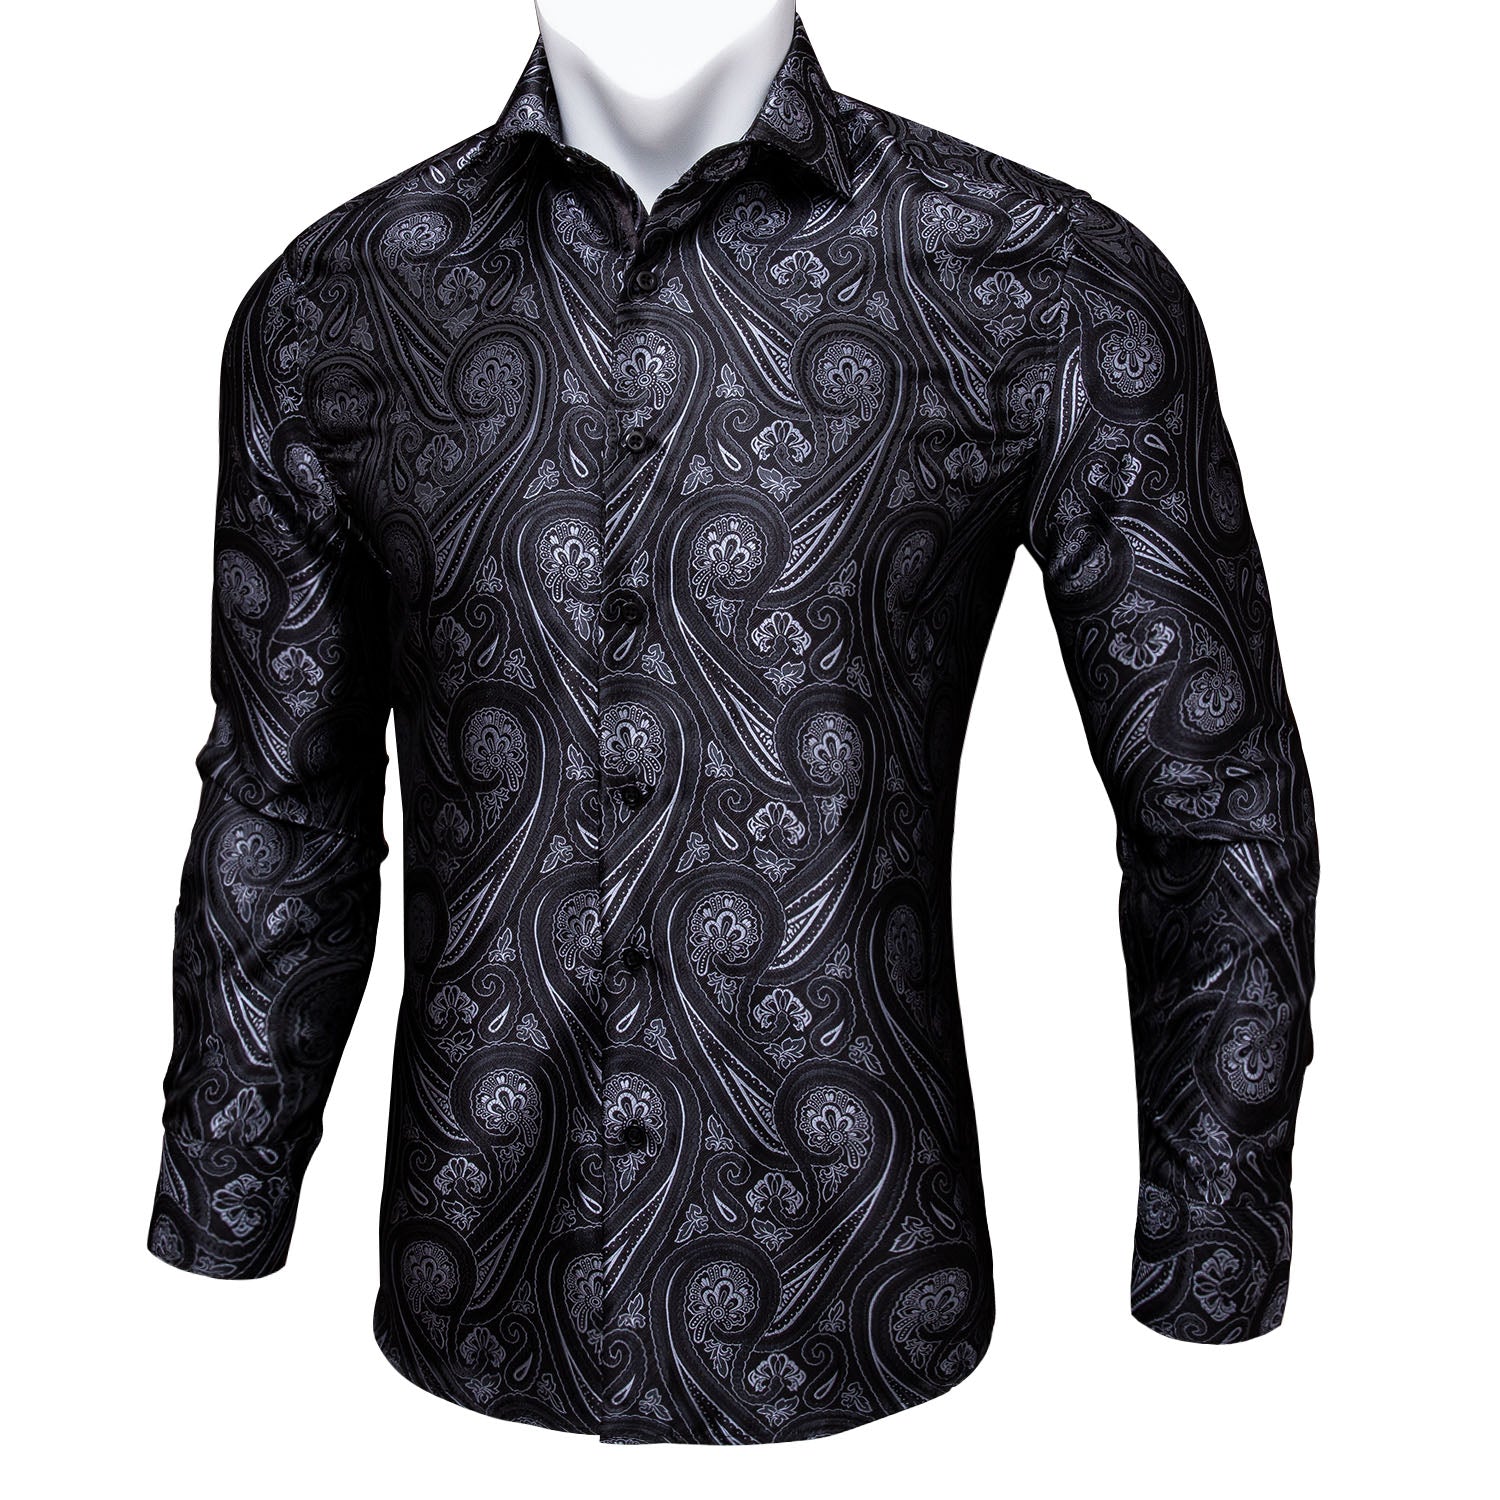 Barry.wang Button Down Shirt Black Grey Floral Long Sleeve Shirt